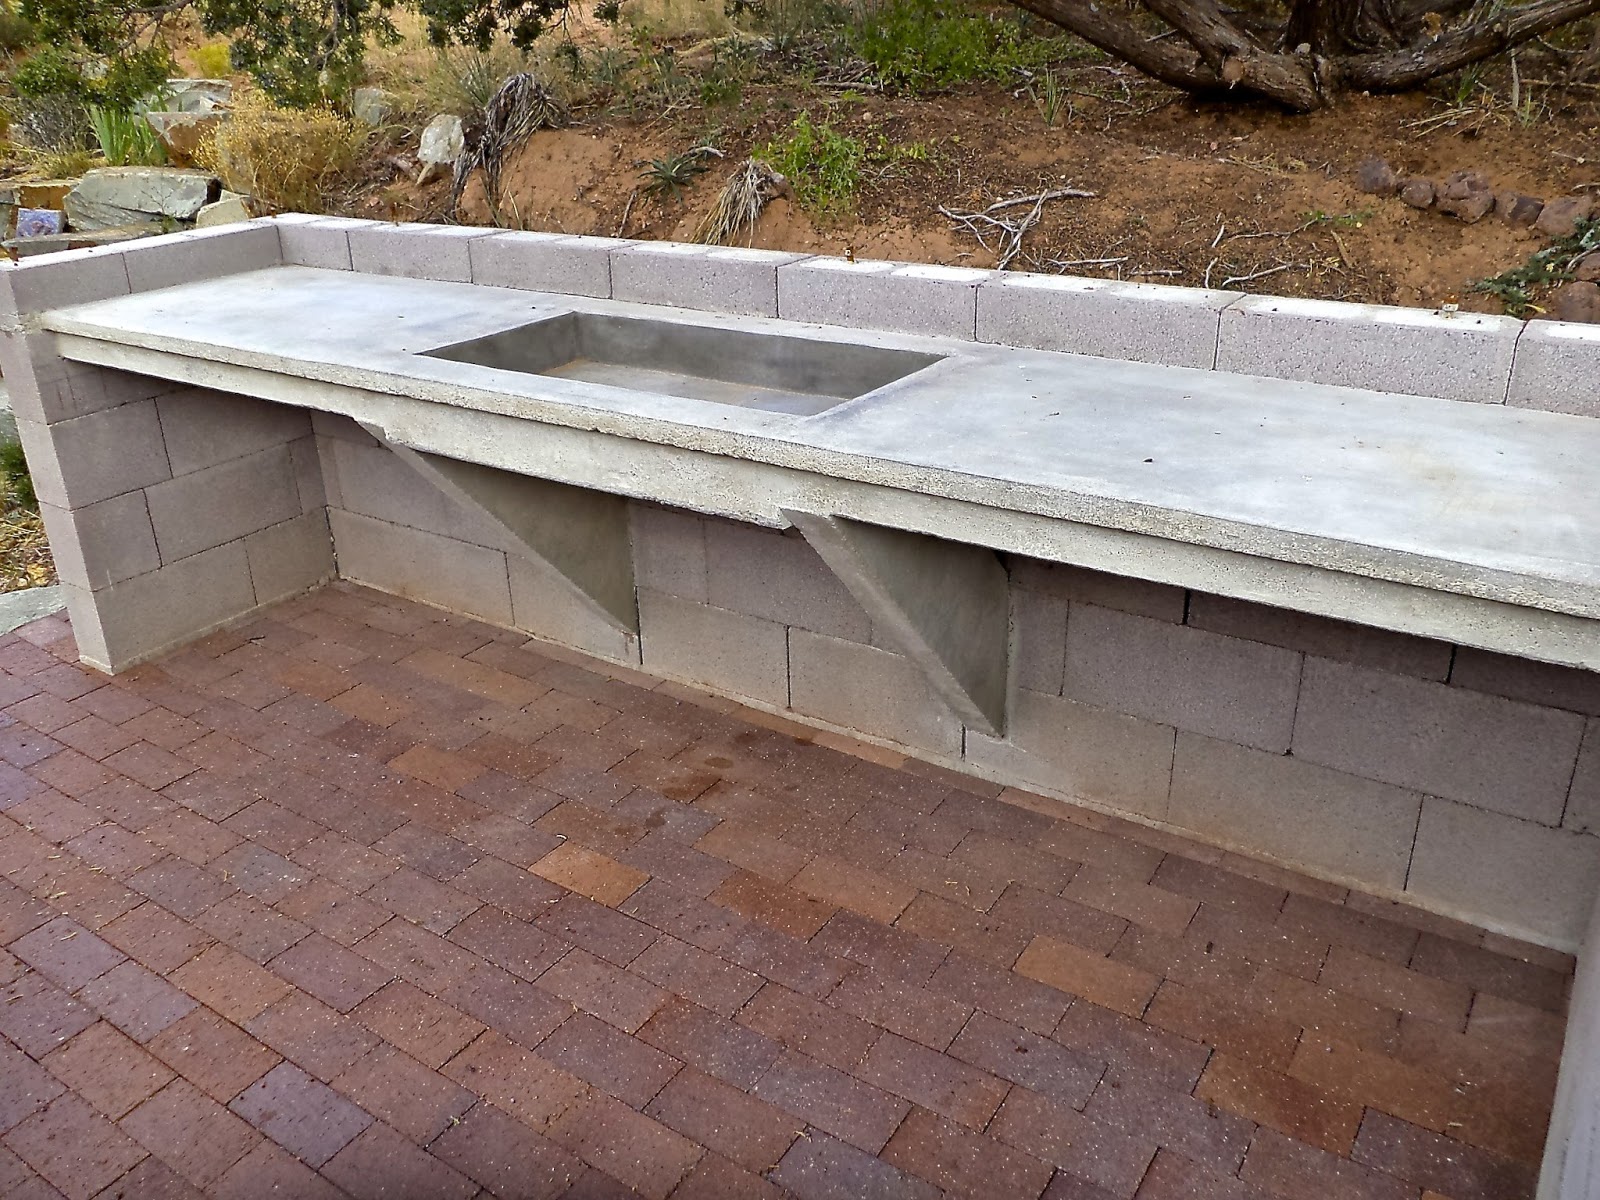 Alt. Build Blog: Building An Outdoor Kitchen: #1 Concrete Sink And